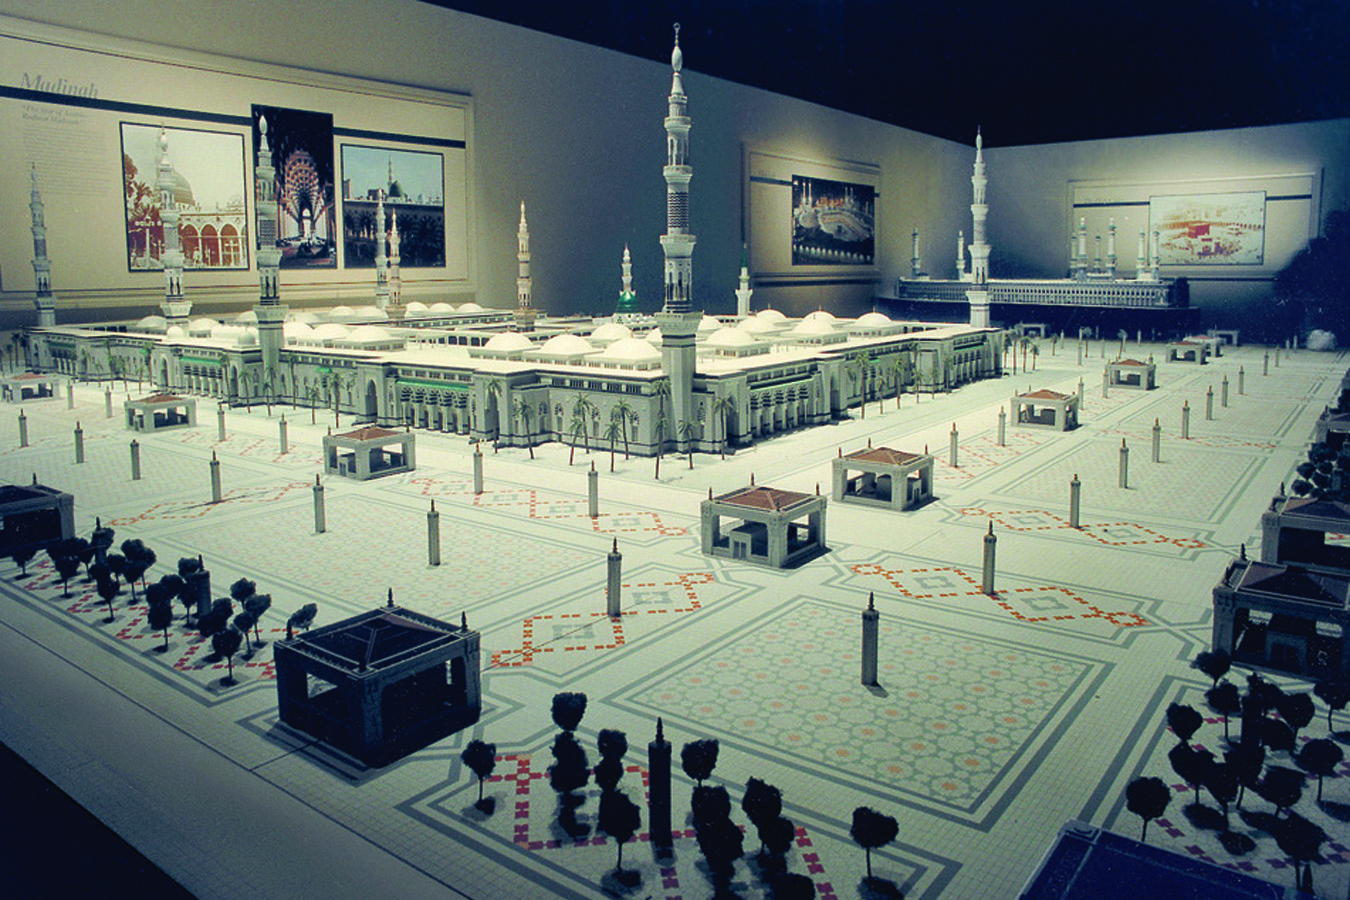 ksa medina : ISLAM: Model of the Mosque at Medina – Over 140 Architectural Models in Exhibit